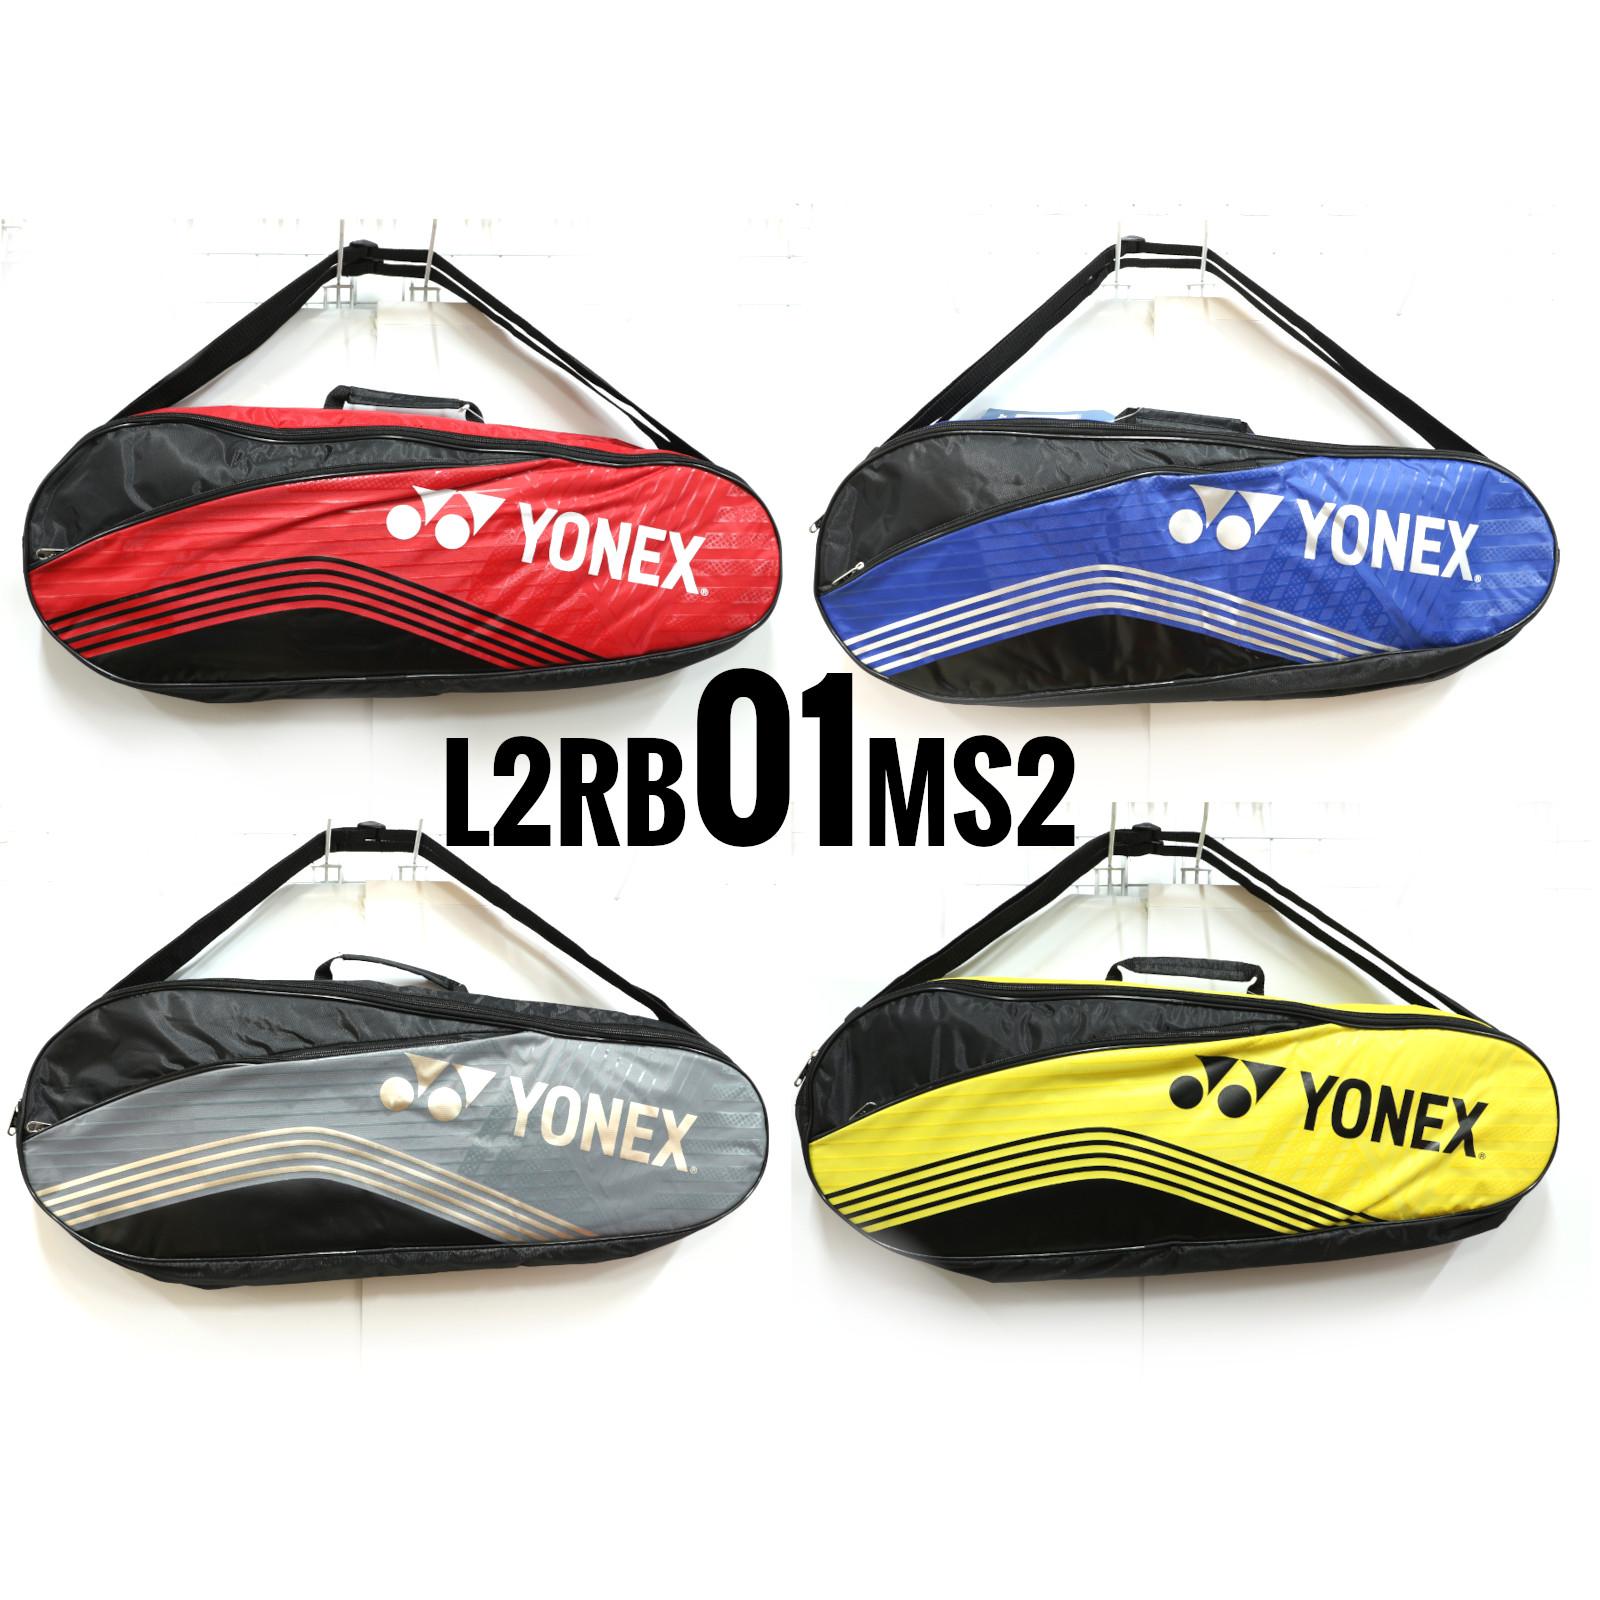 YONEX Shoes Bag Tennis Badminton Gym Sports Racket SKY Blue 30cm x 40cm 3 PCS 